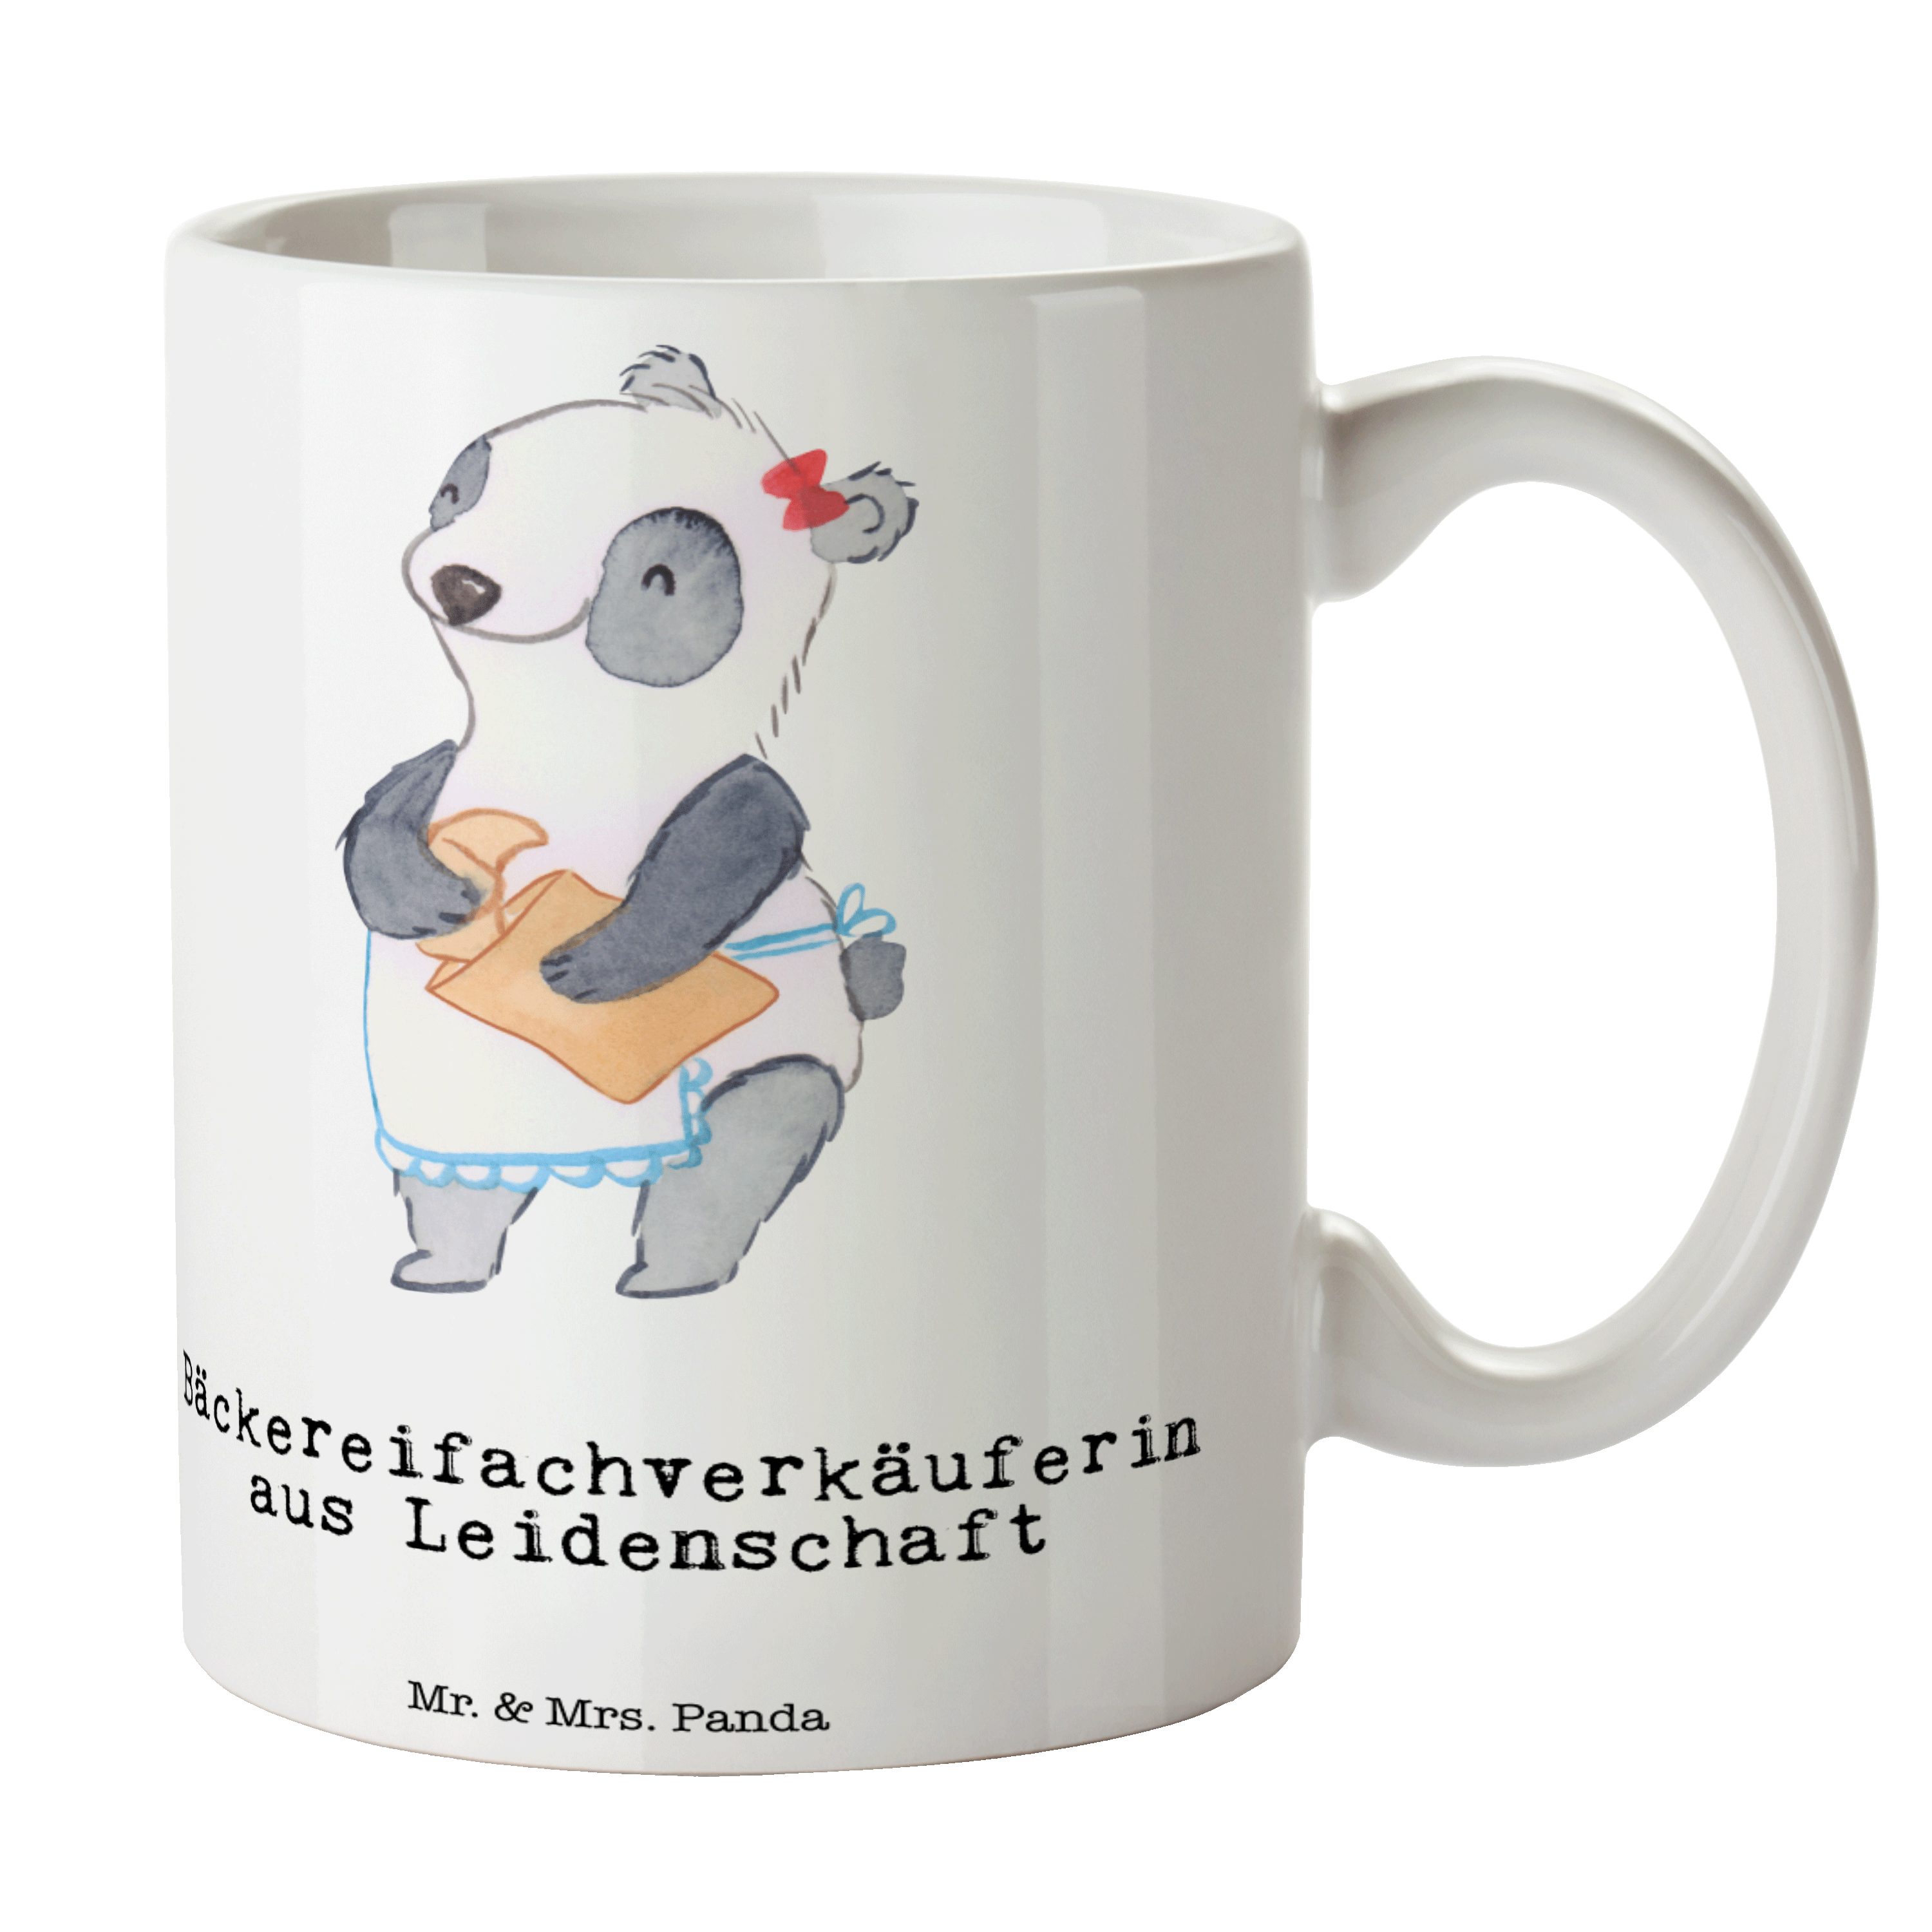 Mr. & Mrs. Panda Tasse Bäckereifachverkäuferin aus Leidenschaft - Weiß - Geschenk, Jubiläum, Keramik